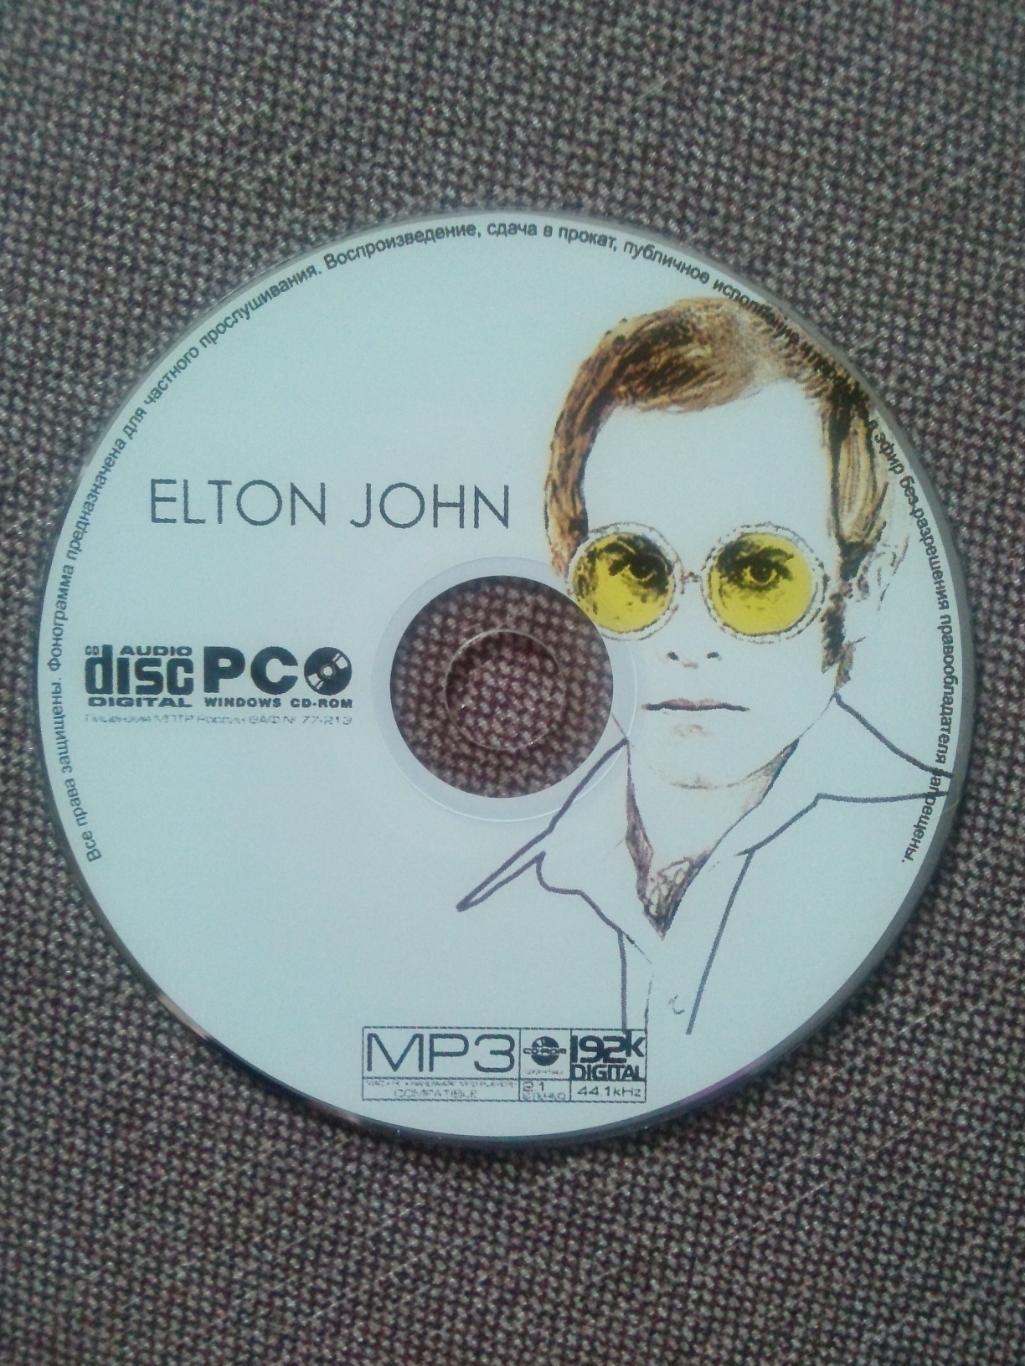 MP - 3 CD диск : Elton John (Элтон Джон) 1970 - 2006 гг. (14 альбомов) Рок 4